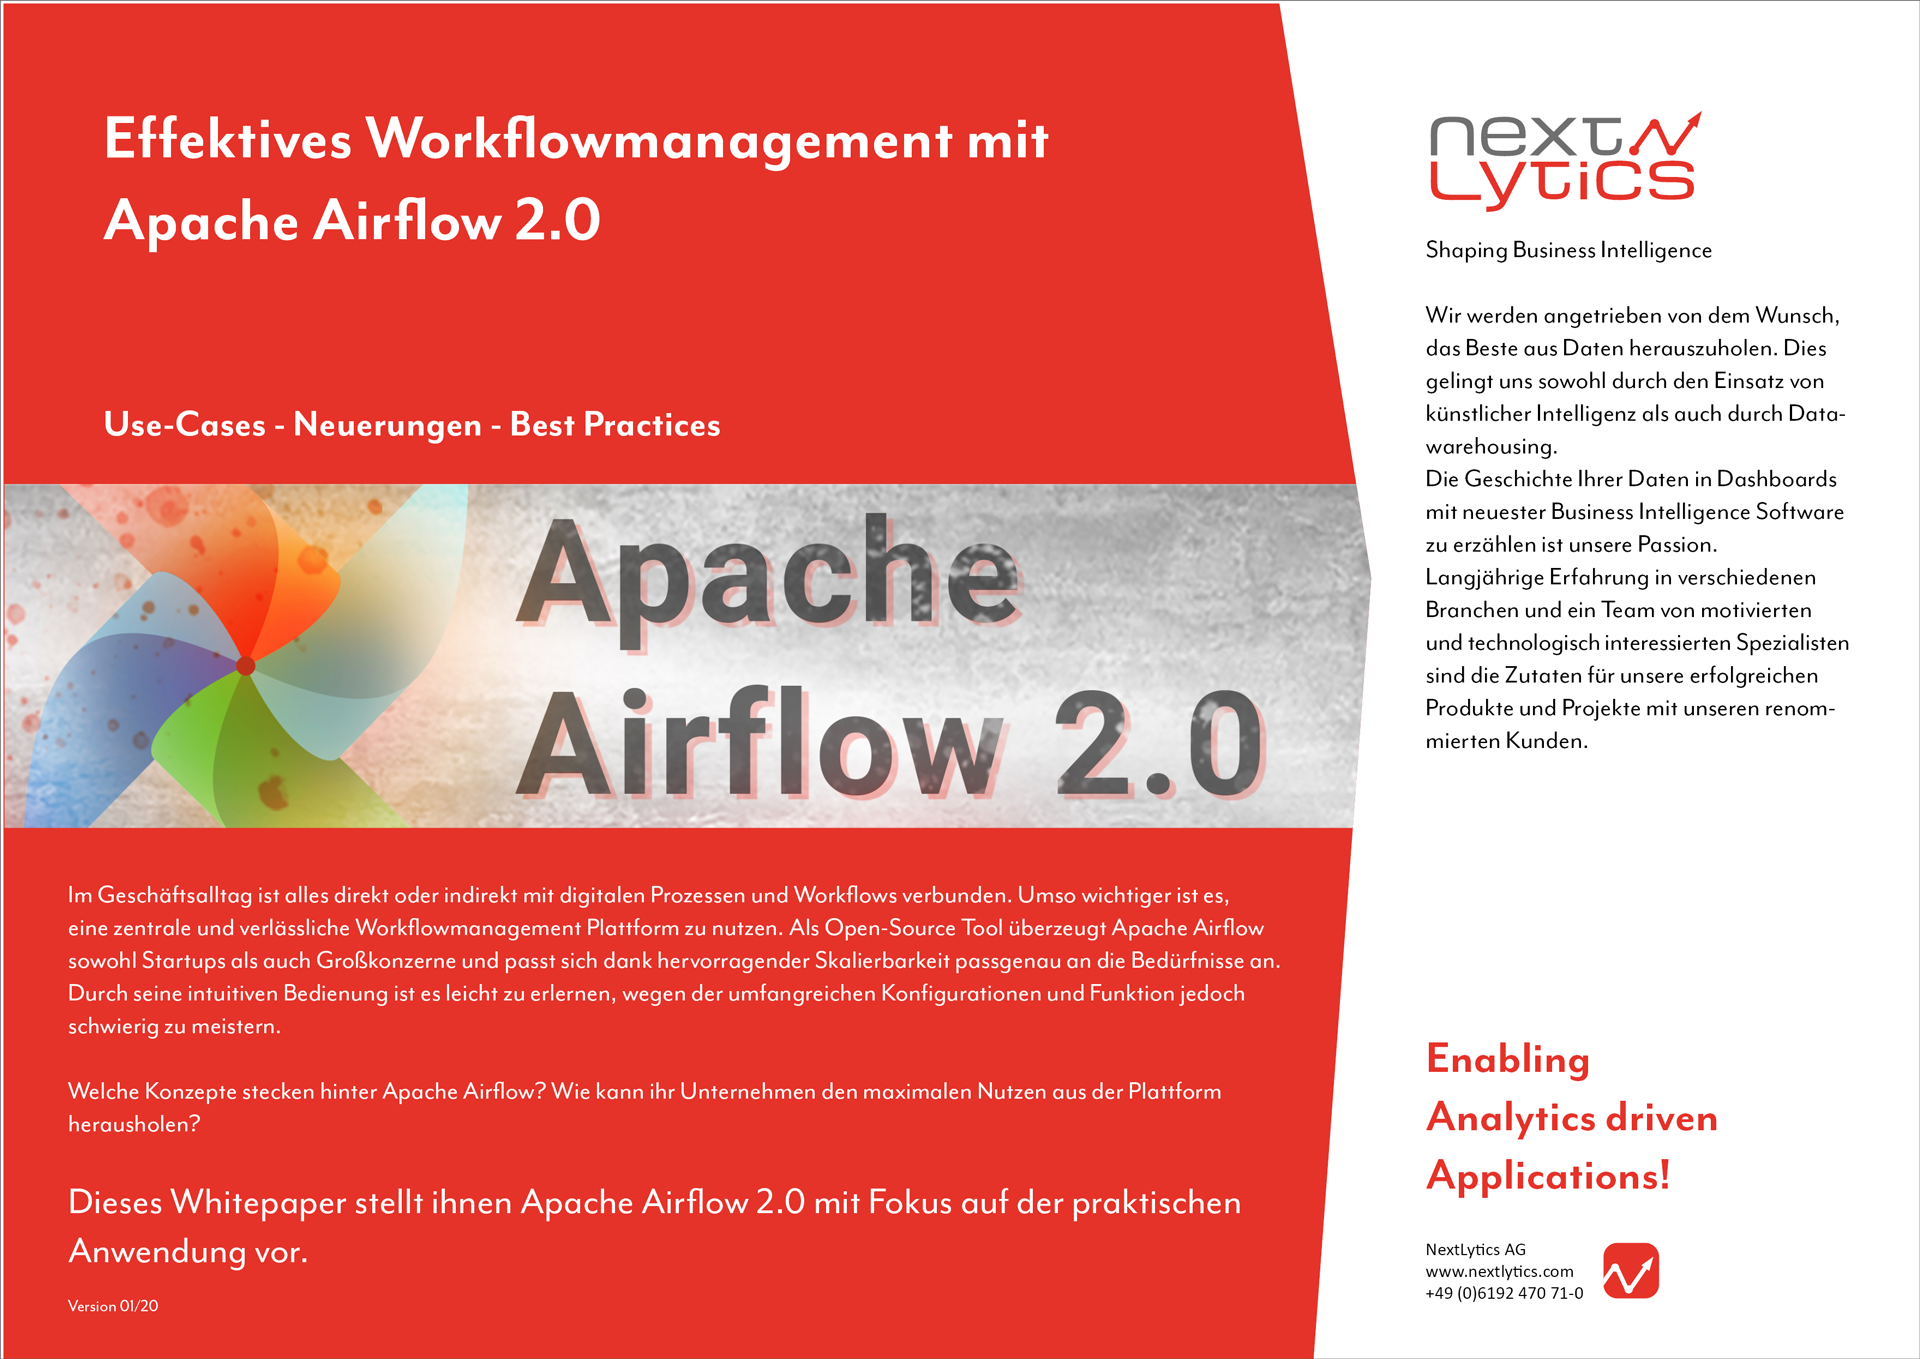 apache airflow competitors